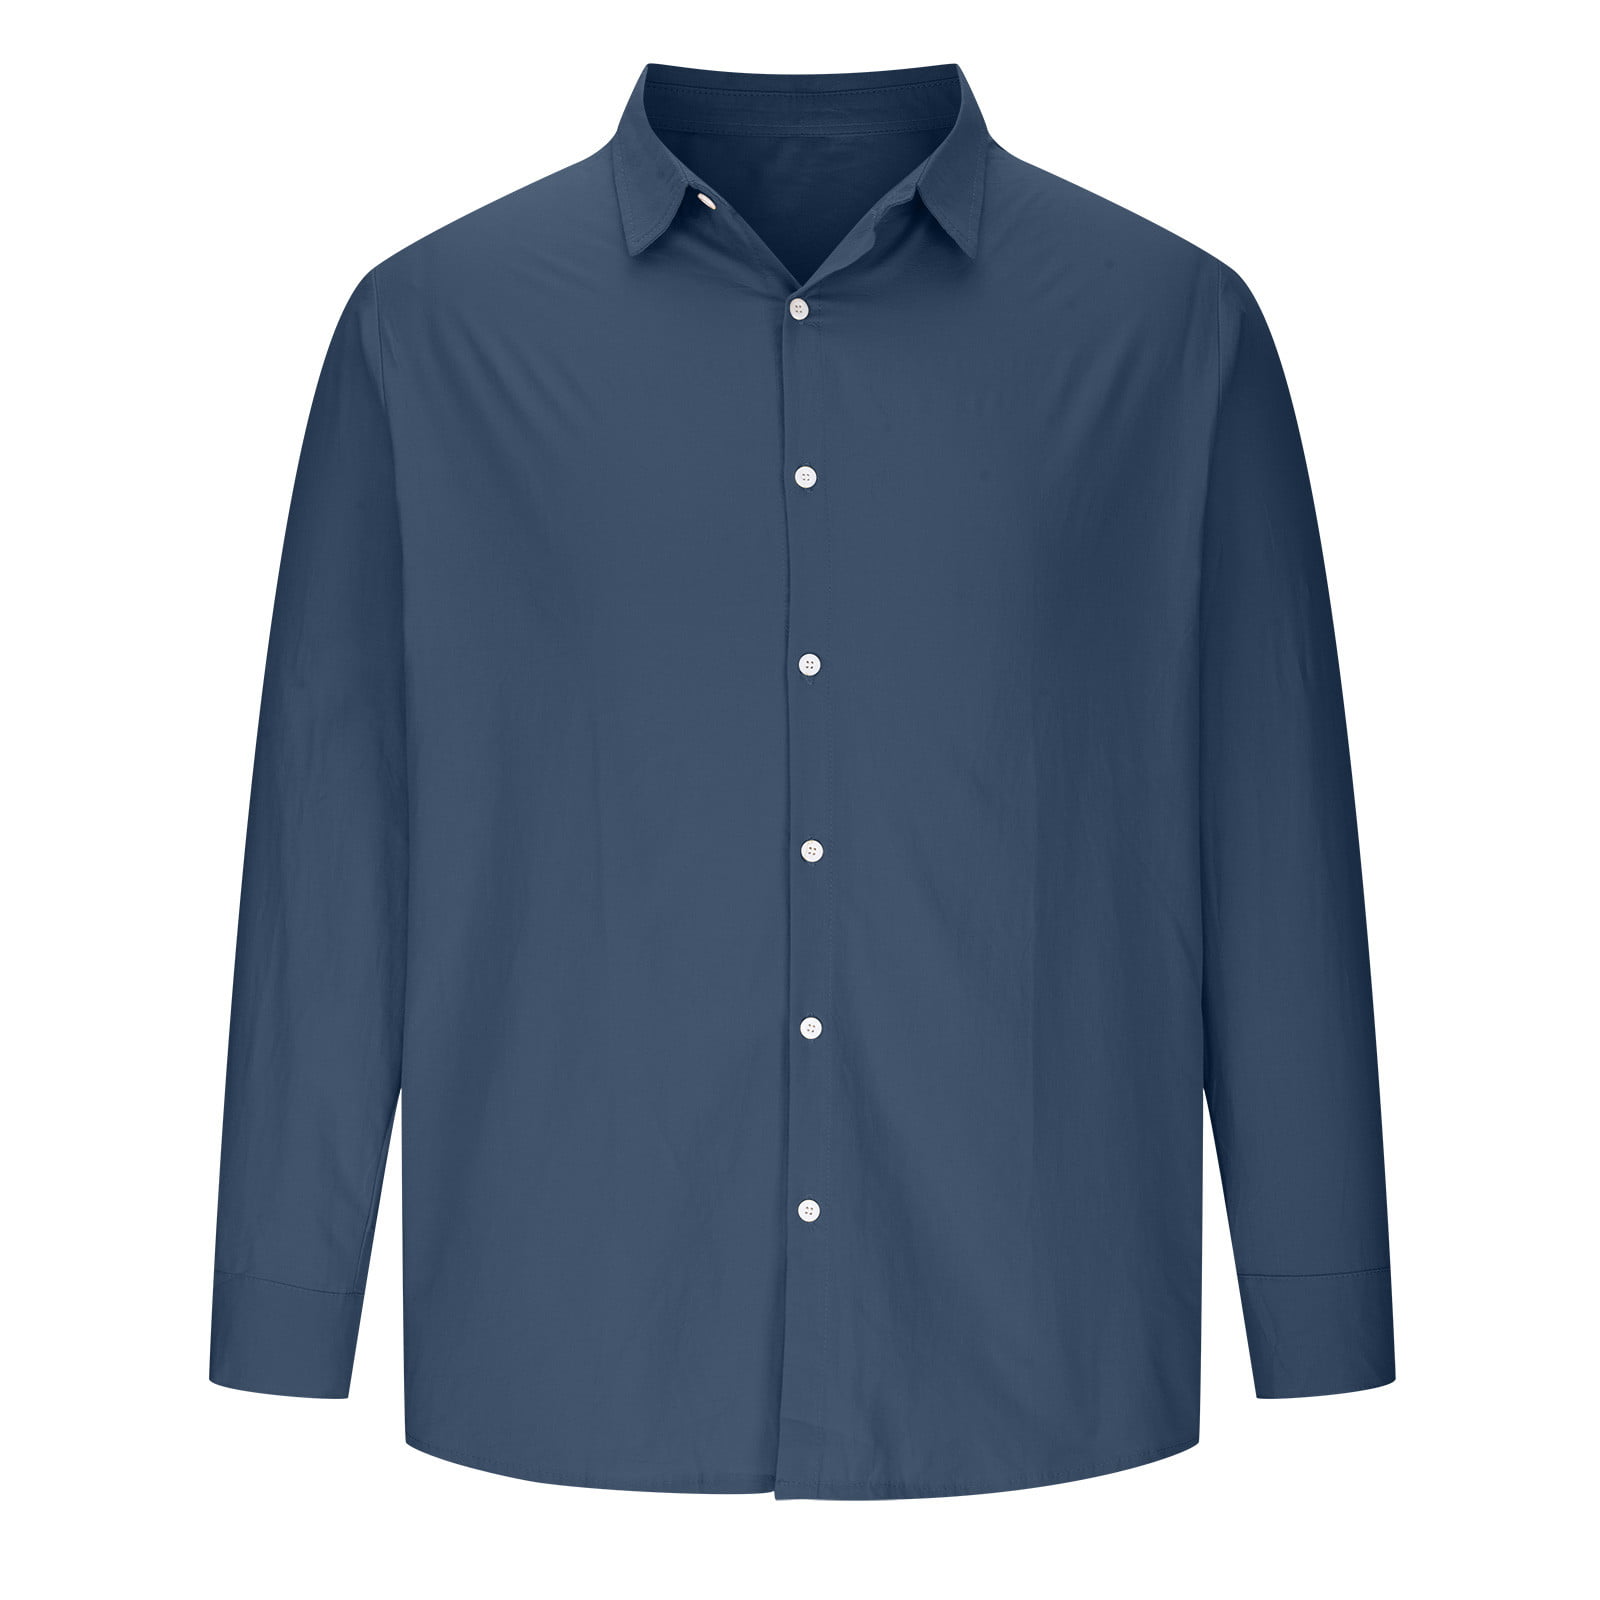  Callcarl Long Sleeve Shirts for Men, Men's Long Sleeve Cotton  Linen Shirt Button Up Casual Summer Button Down Beach Yoga Tops Blue :  Sports & Outdoors